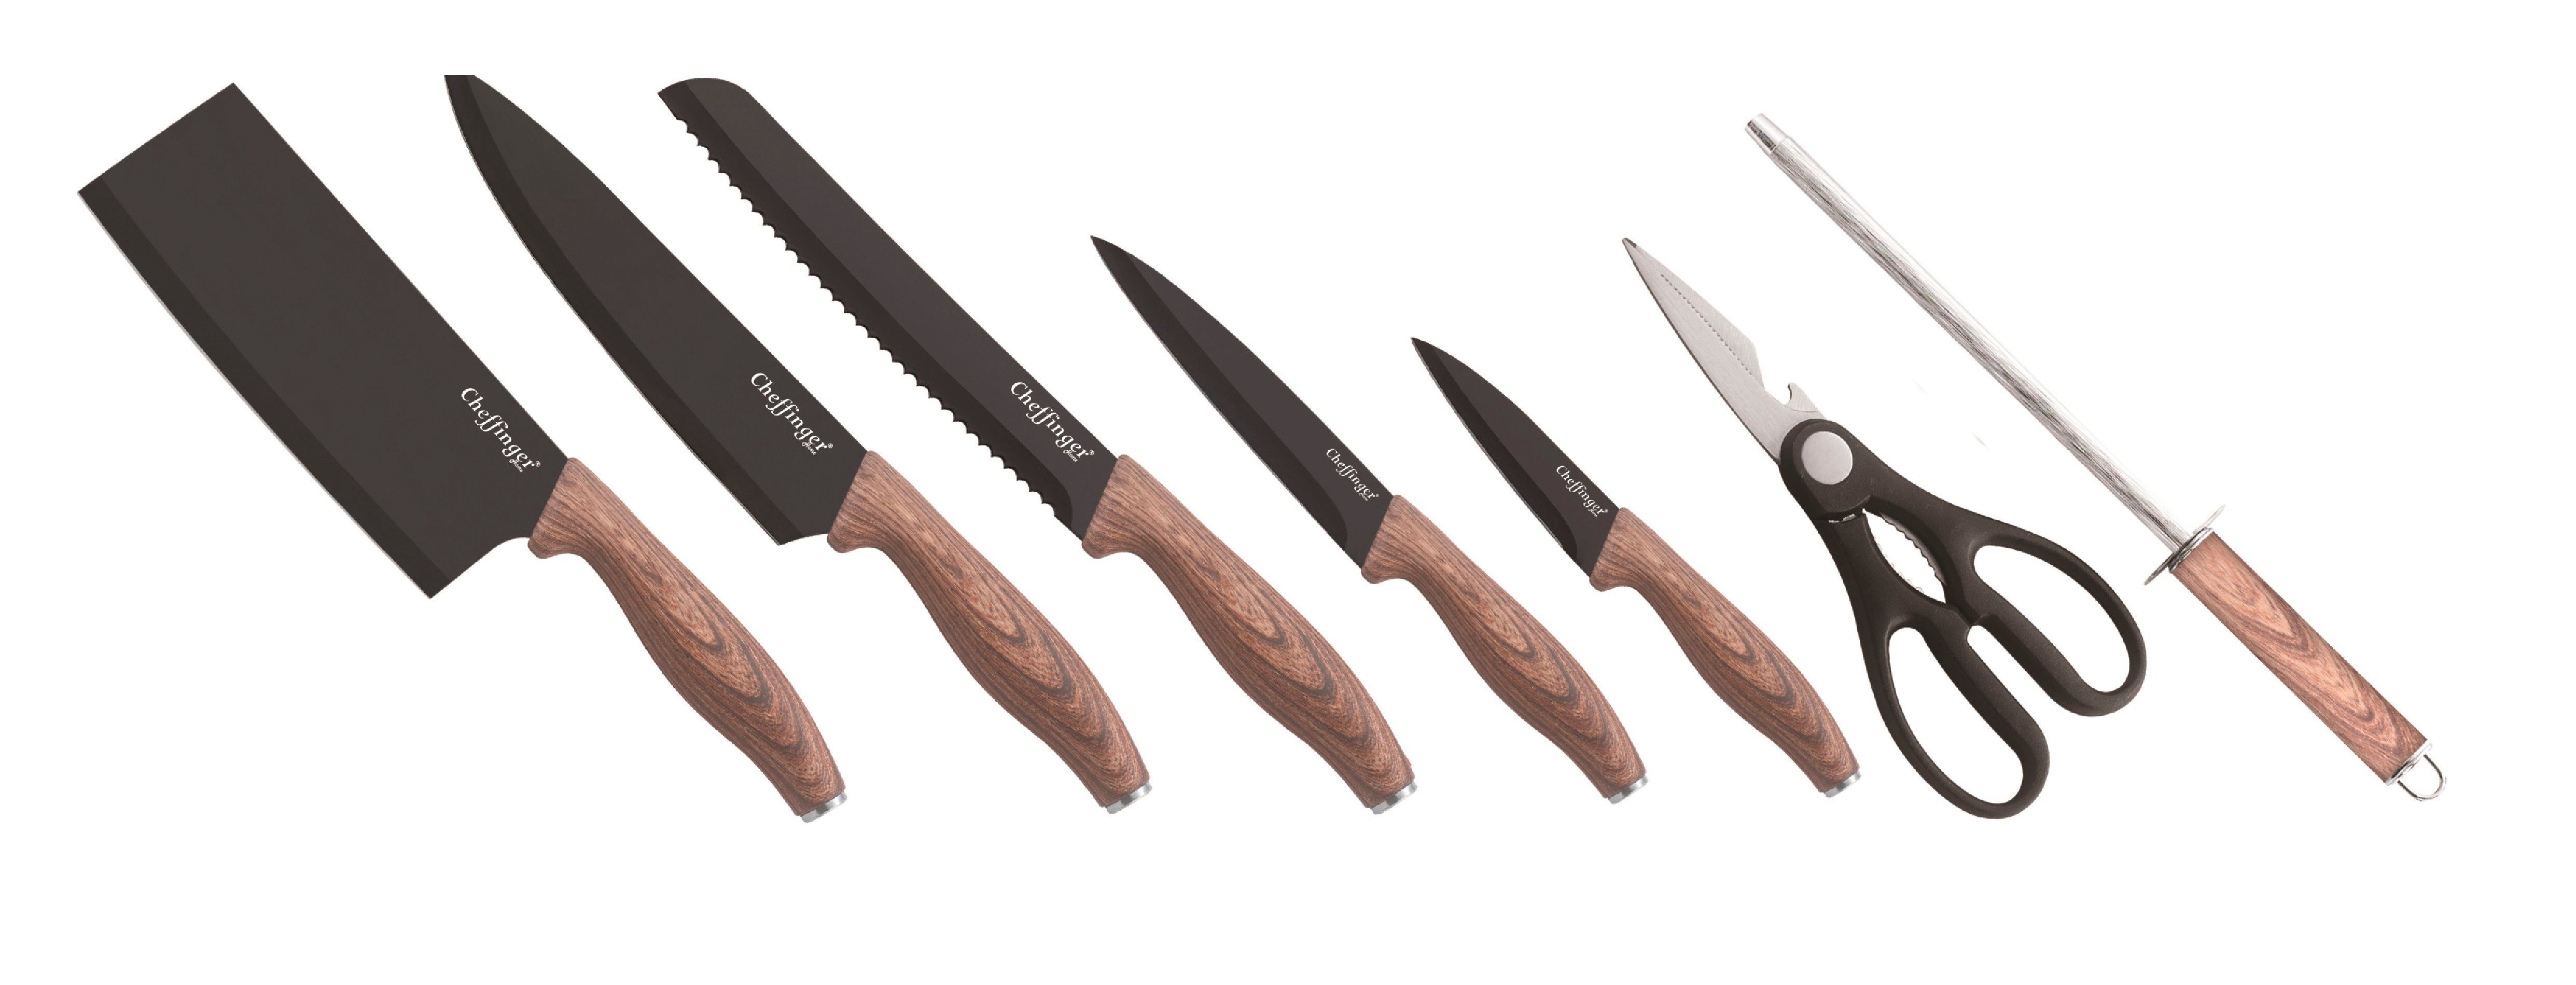 Messer Messerblock Messer-Set tlg. 8 Cheffinger drehbar Messerständer Messerset (8-tlg) Kochmesser